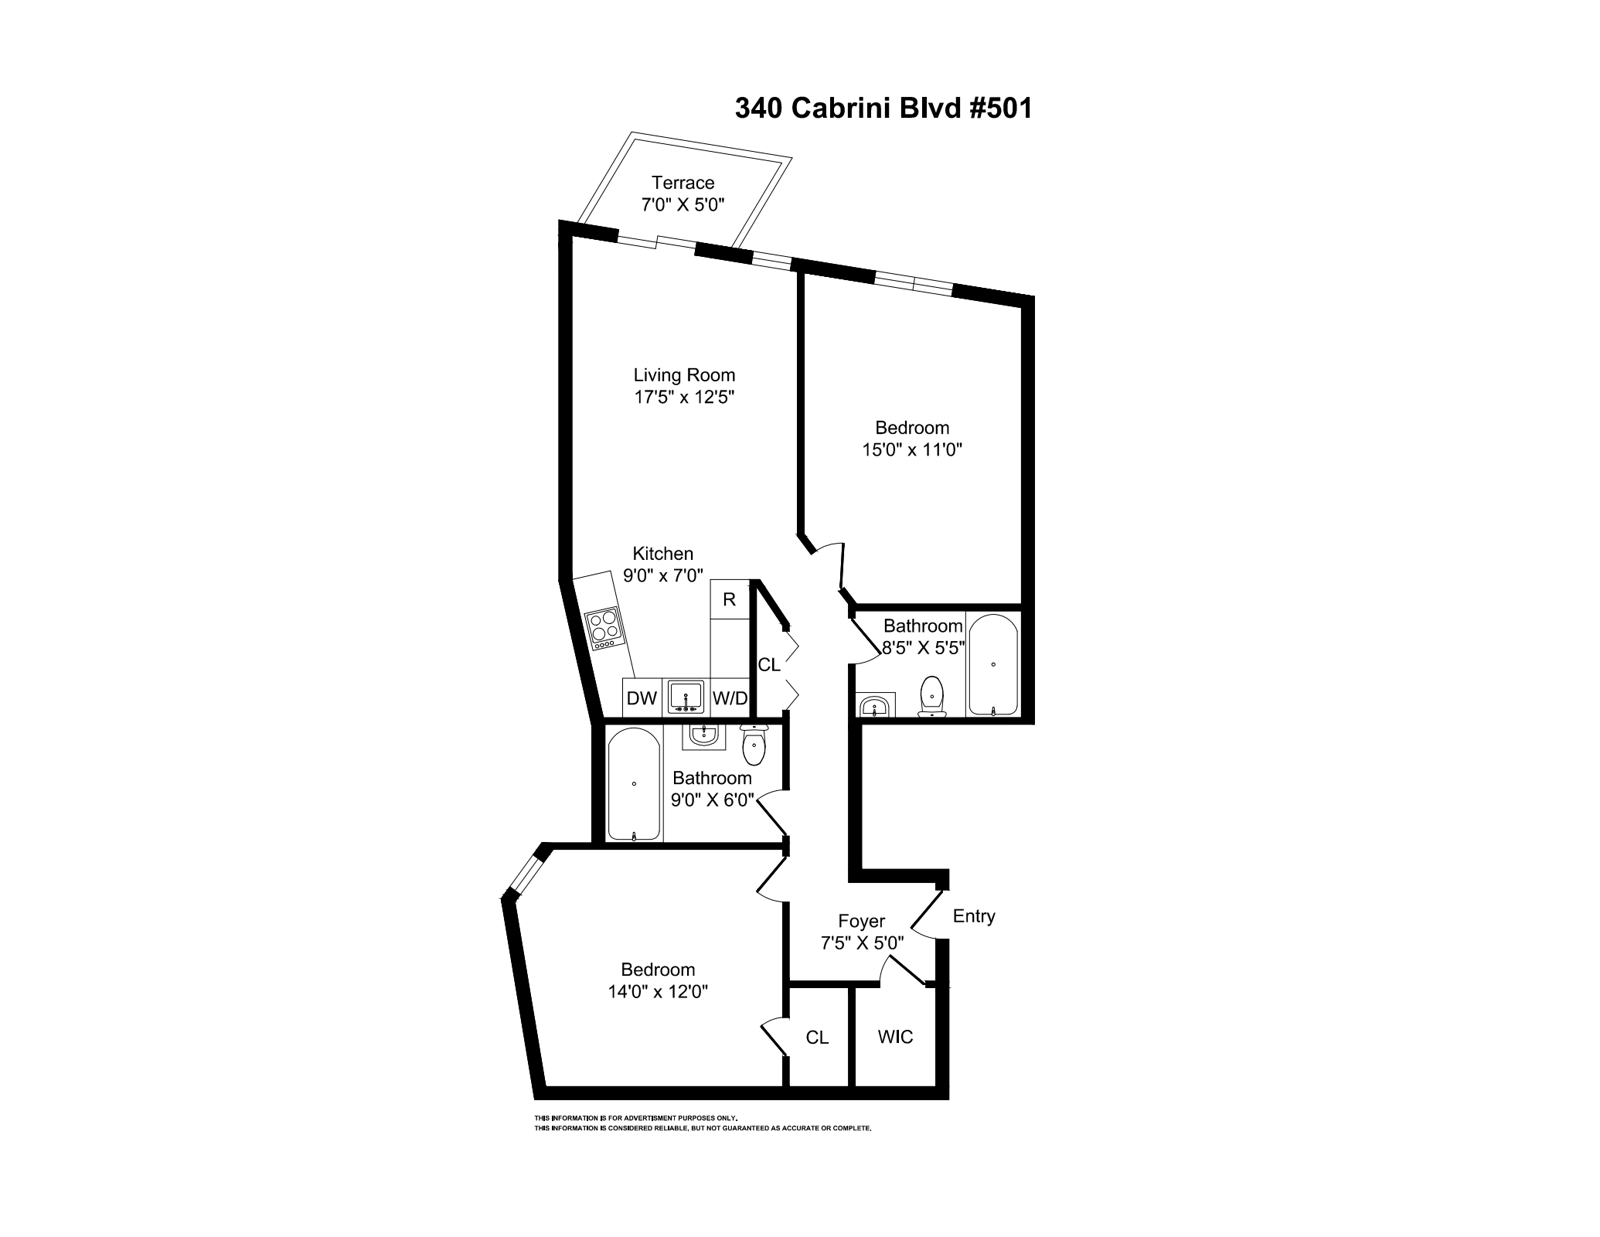 Floorplan for 340 Cabrini Boulevard, 501